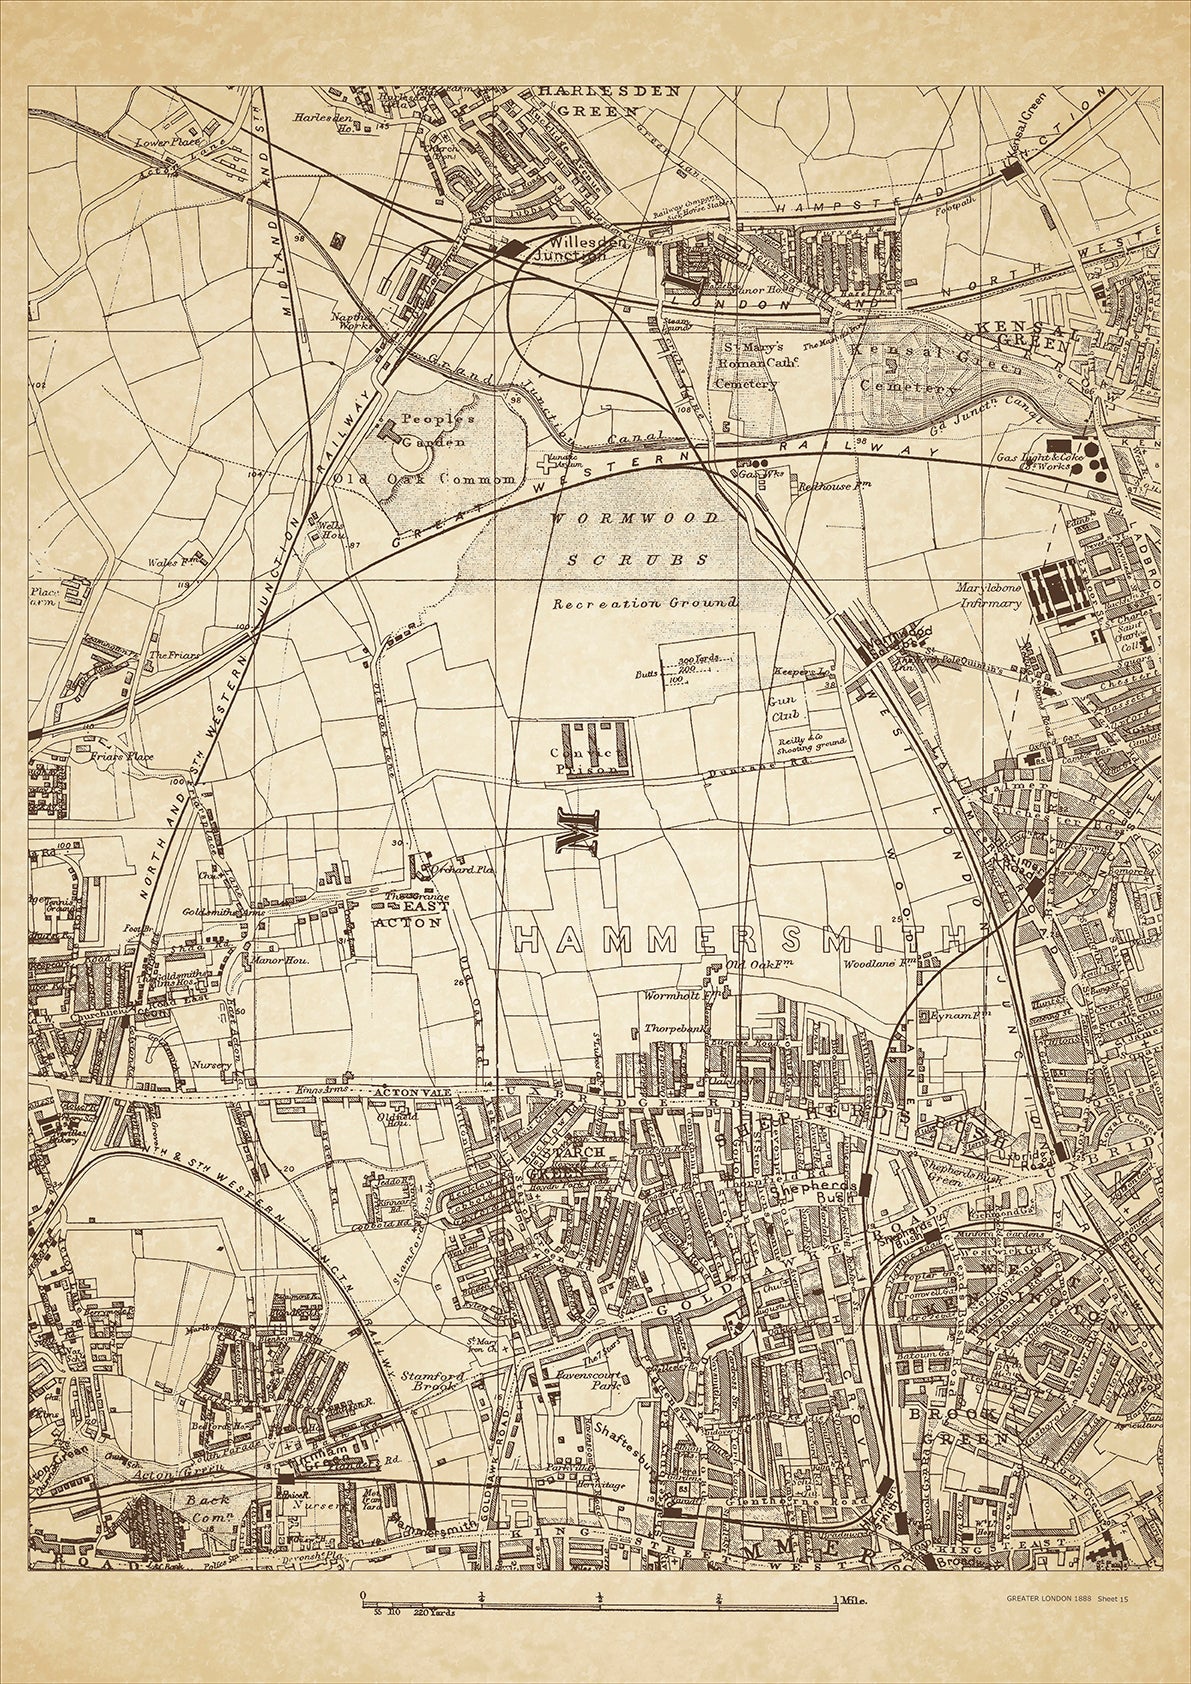 Greater London in 1888 Series - showing Shepherds Bush, Wormwood Scrubs, Harlesden Green (south), Willesden Junction, Kensal Green (west), Acton Vale, East Acton, Starch Green, West Kensington, Brook Green  - sheet 15